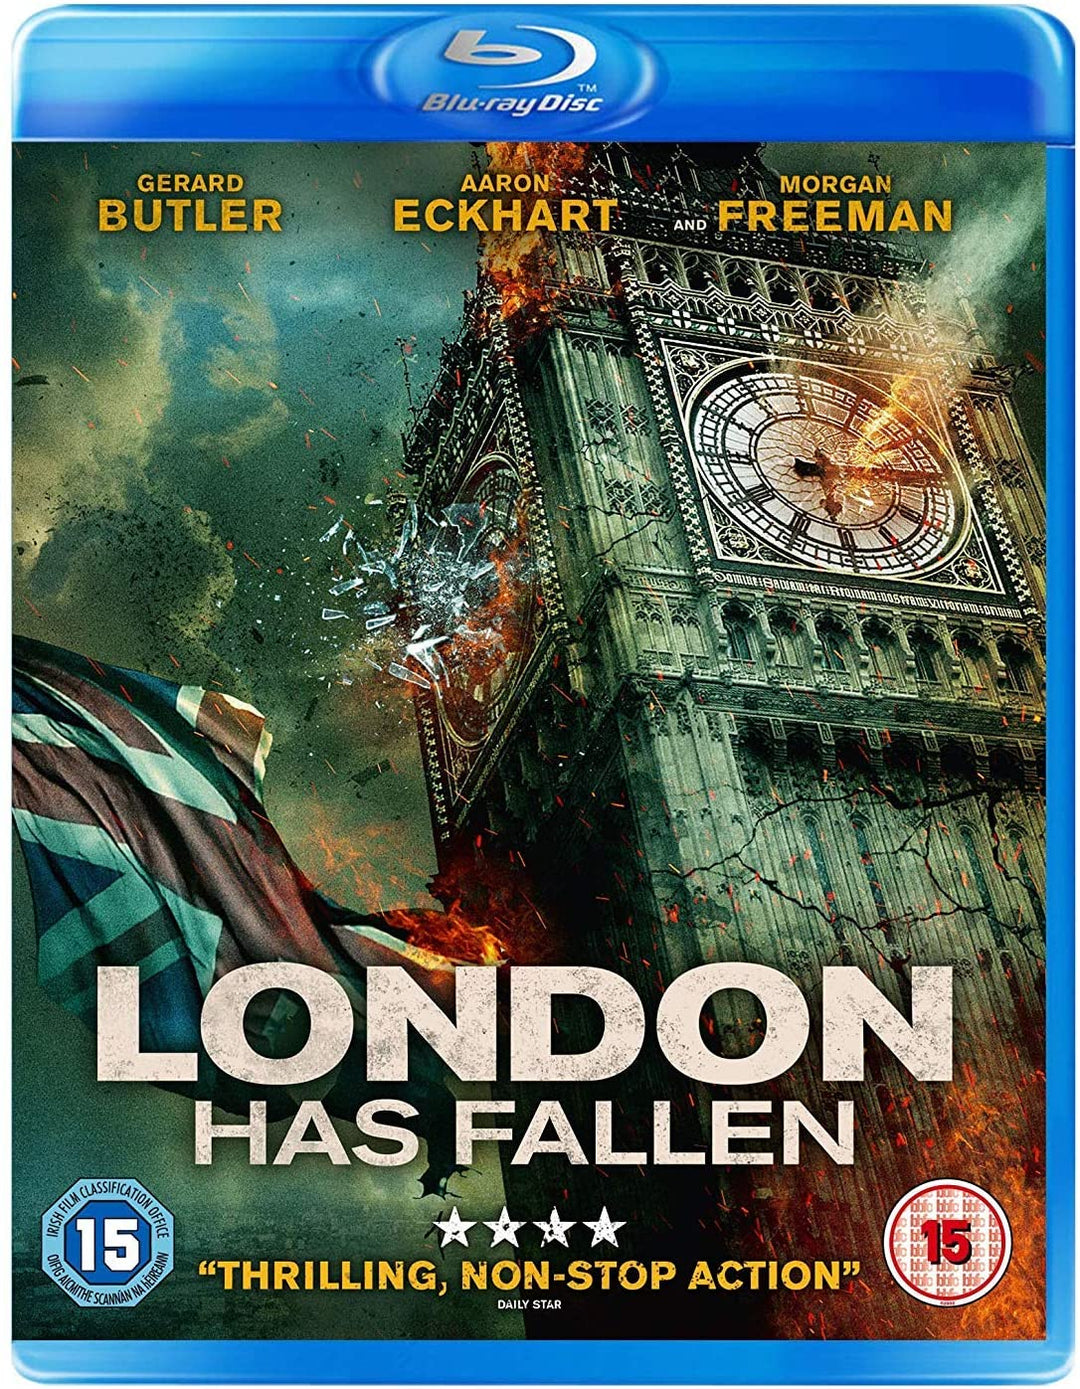 London Has Fallen – Action [Blu-ray]